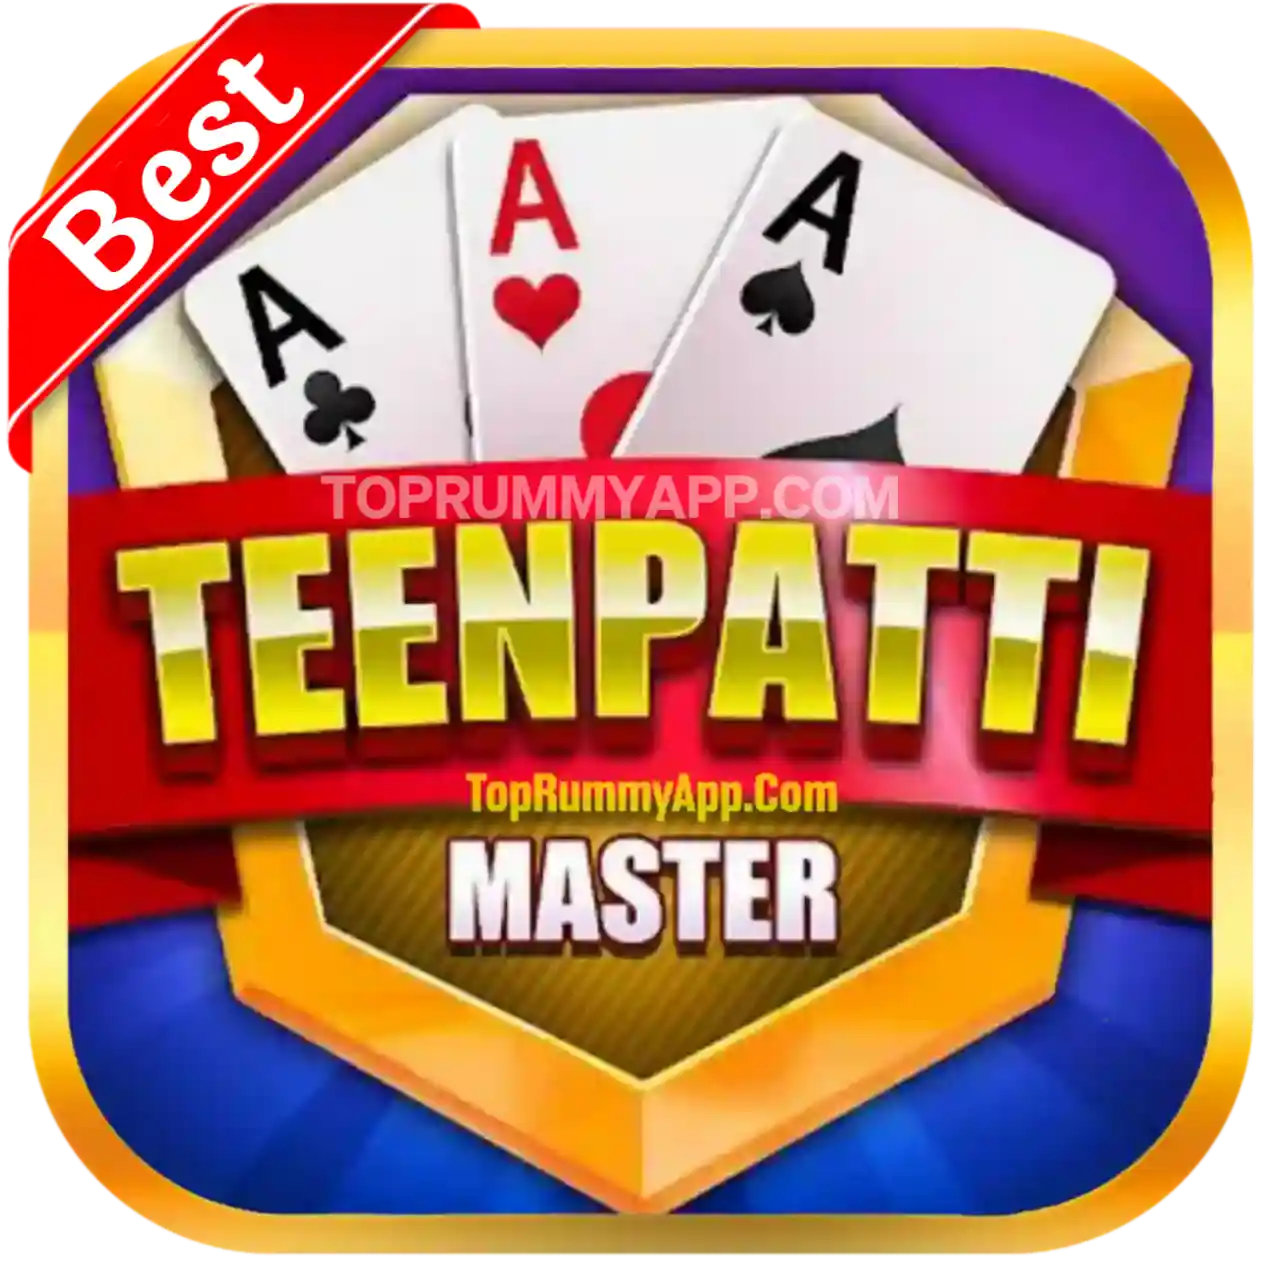 Teen Patti Master Apk Download - Top 10 Rummy App List 41 Bonus